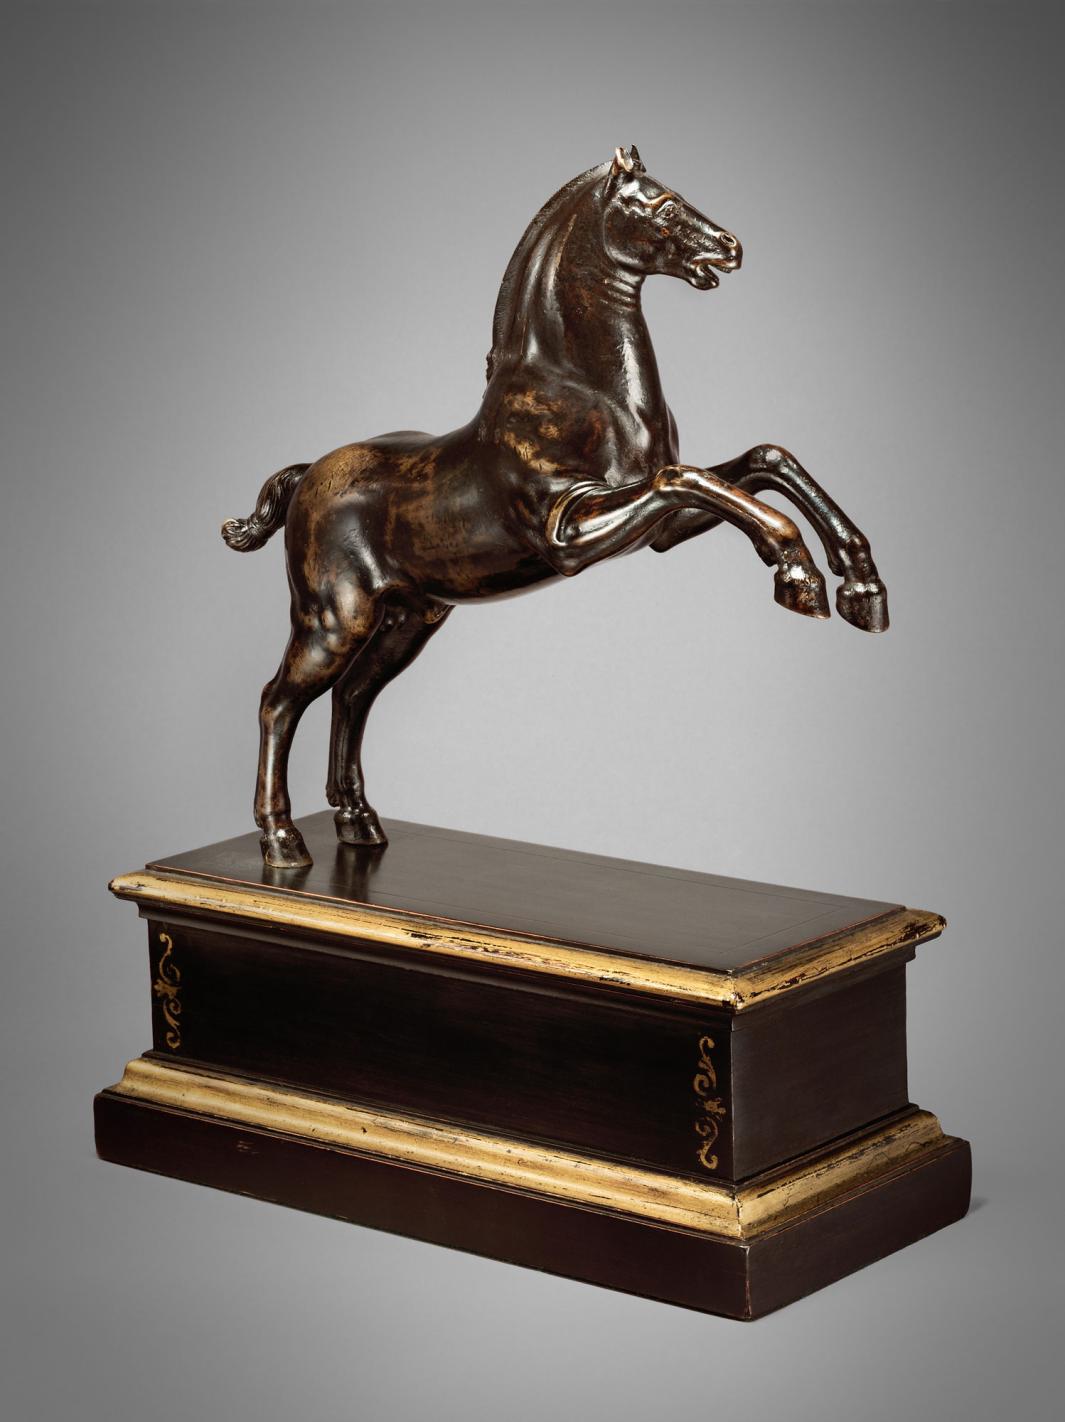 Bronze sculpture of a rearing horse.